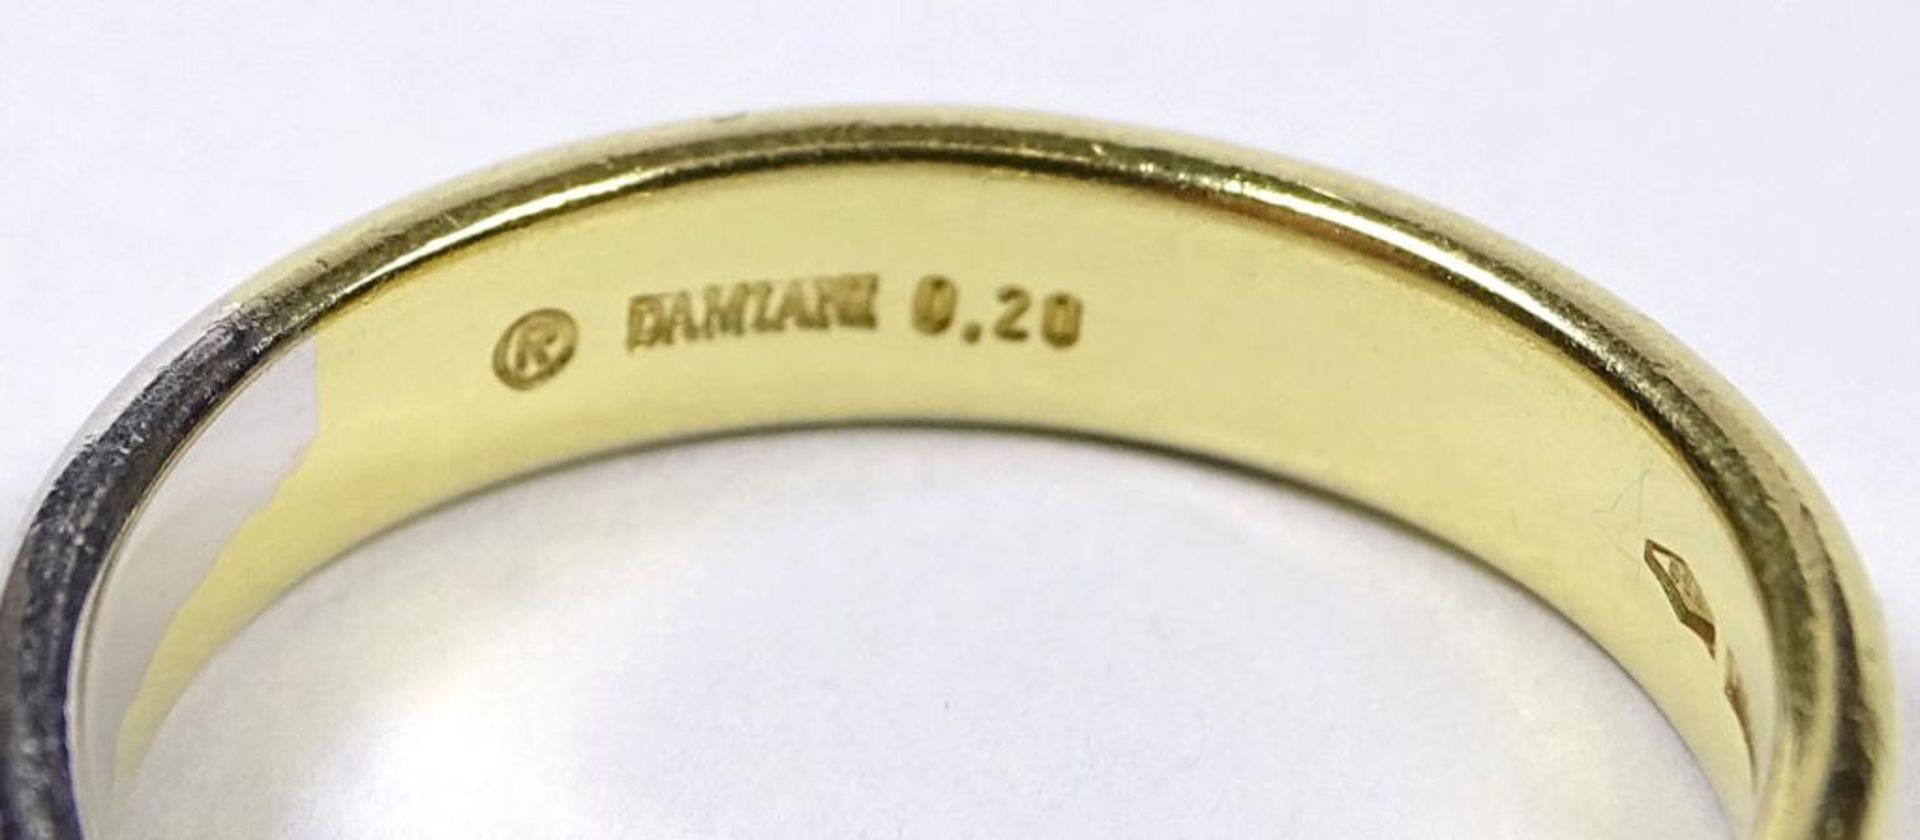 Solitär-Brillant-Ring,Bicolor,Gold 750er, Brillant 0,20ct.,"Damiani", 3181 AL, 4,31gr., RG 55/5 - Bild 8 aus 10